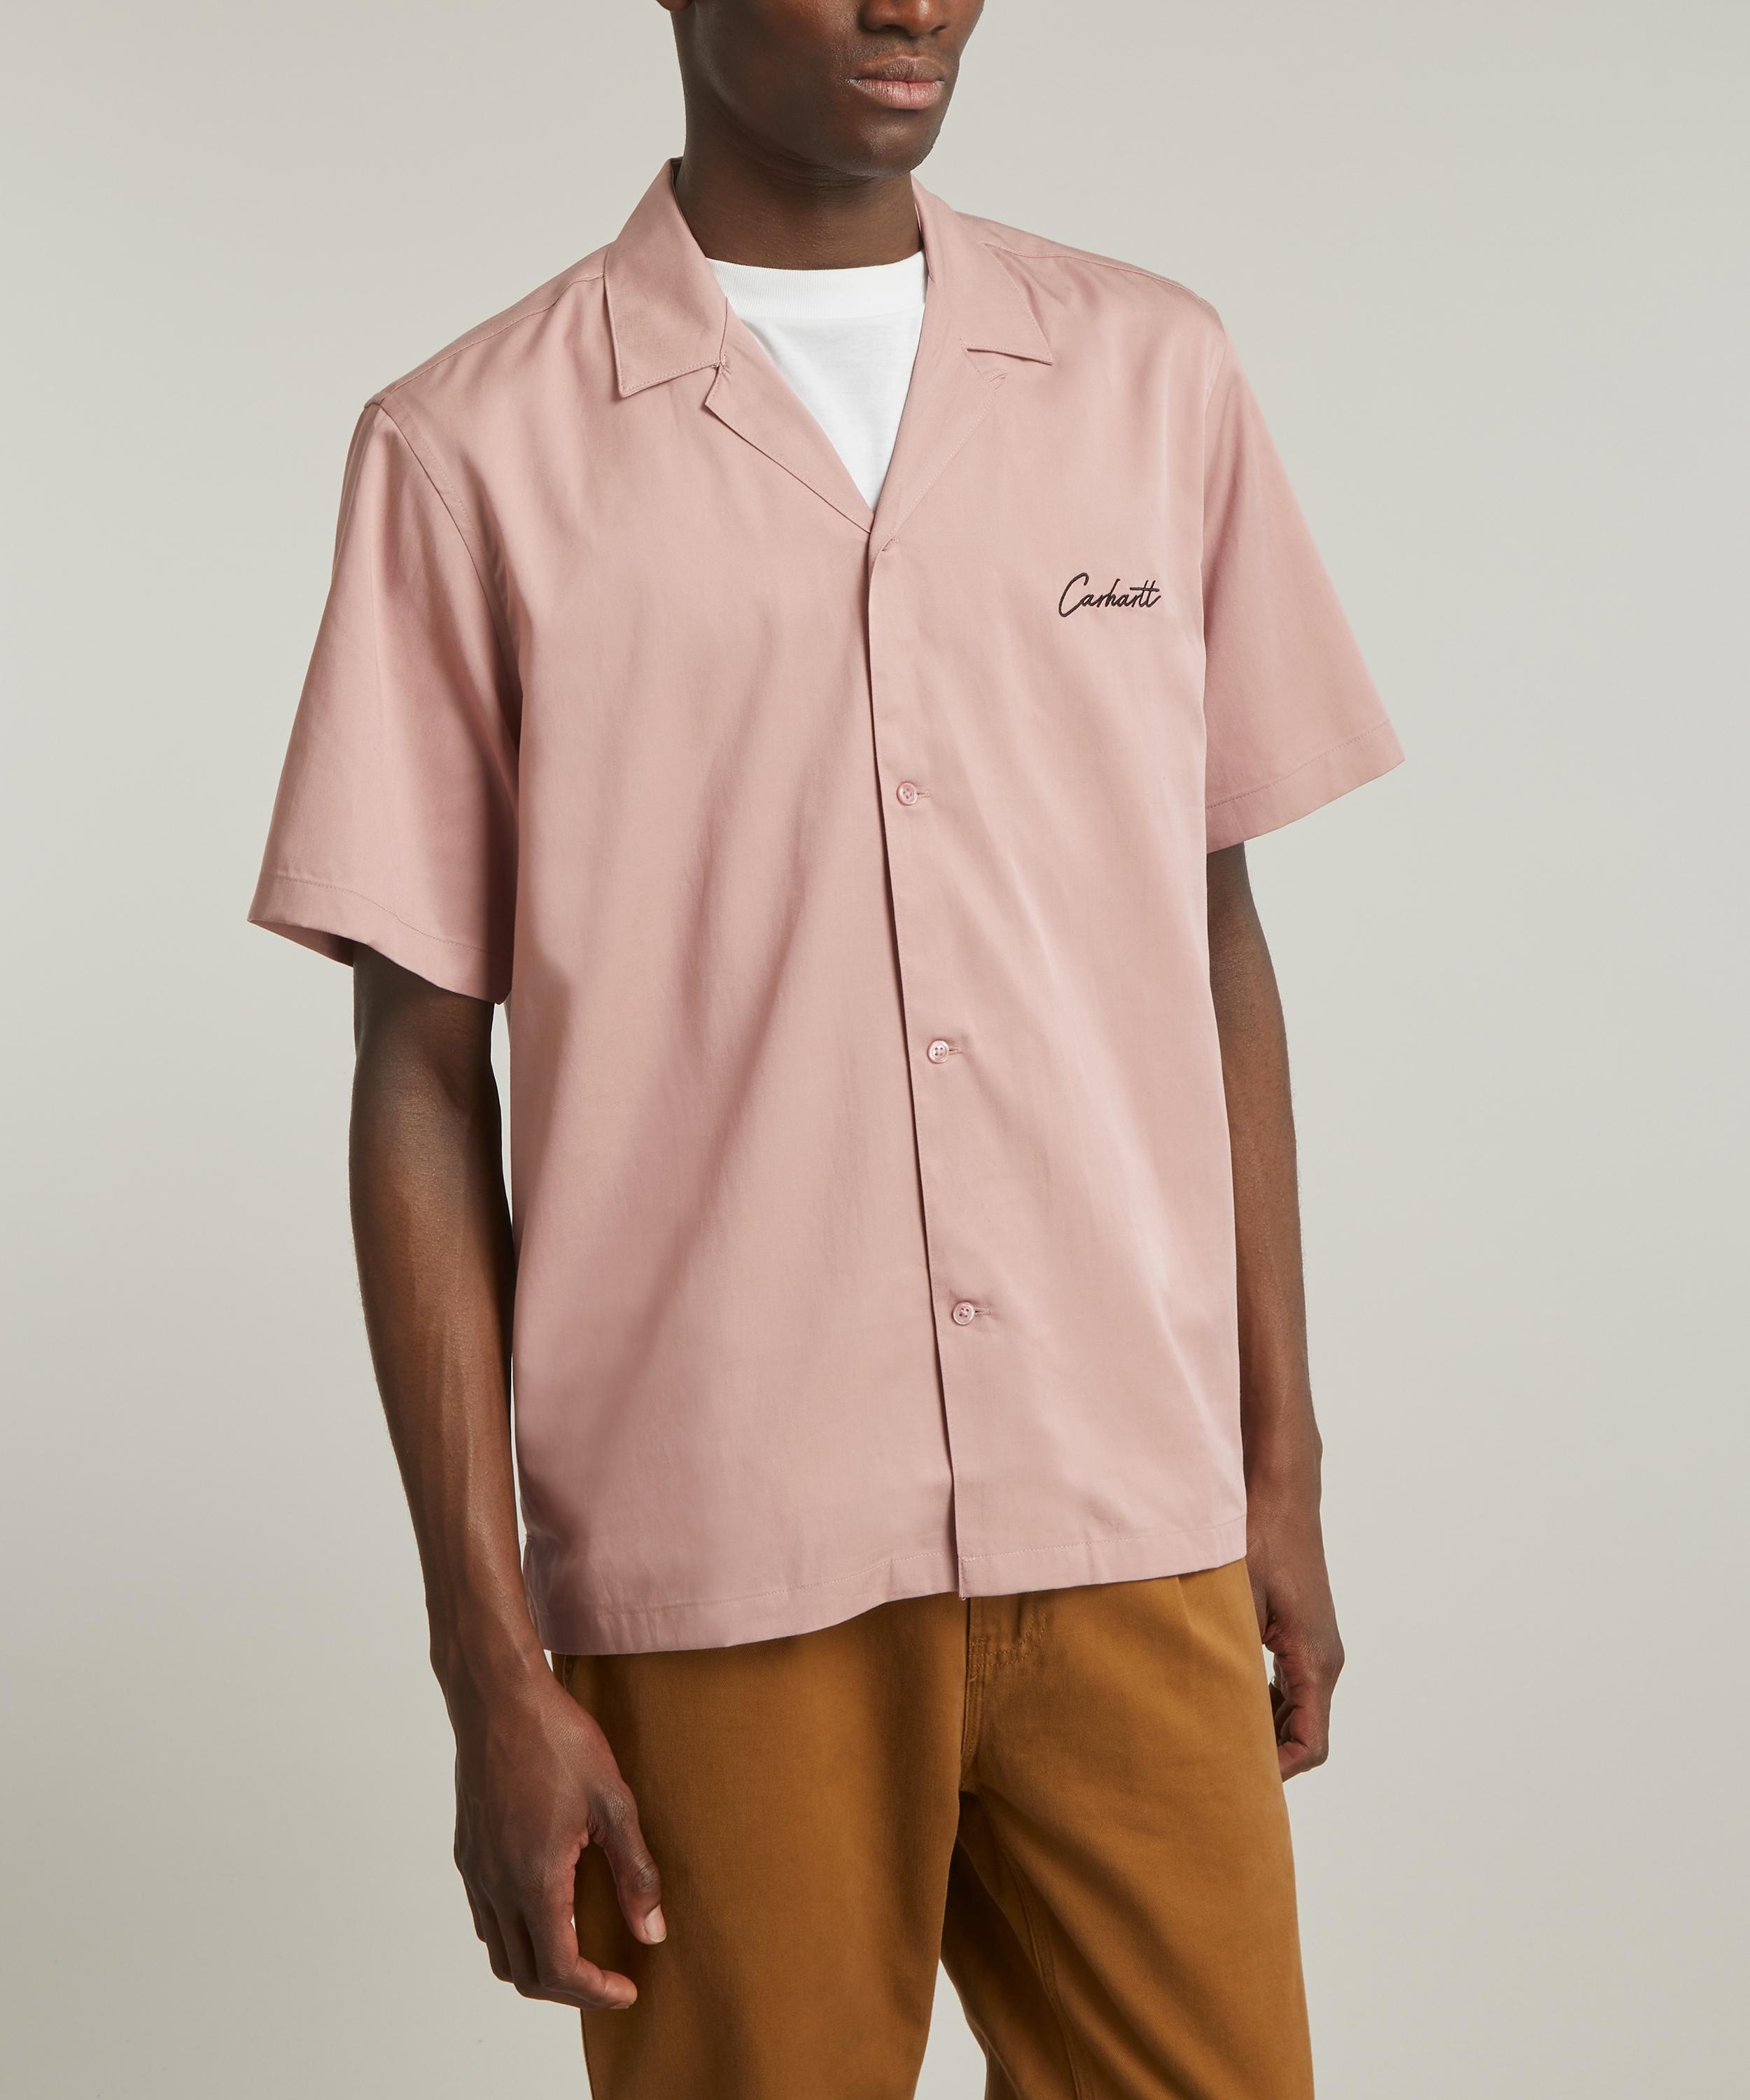 SS Delray Glassy Pink Bowling Shirt - 3